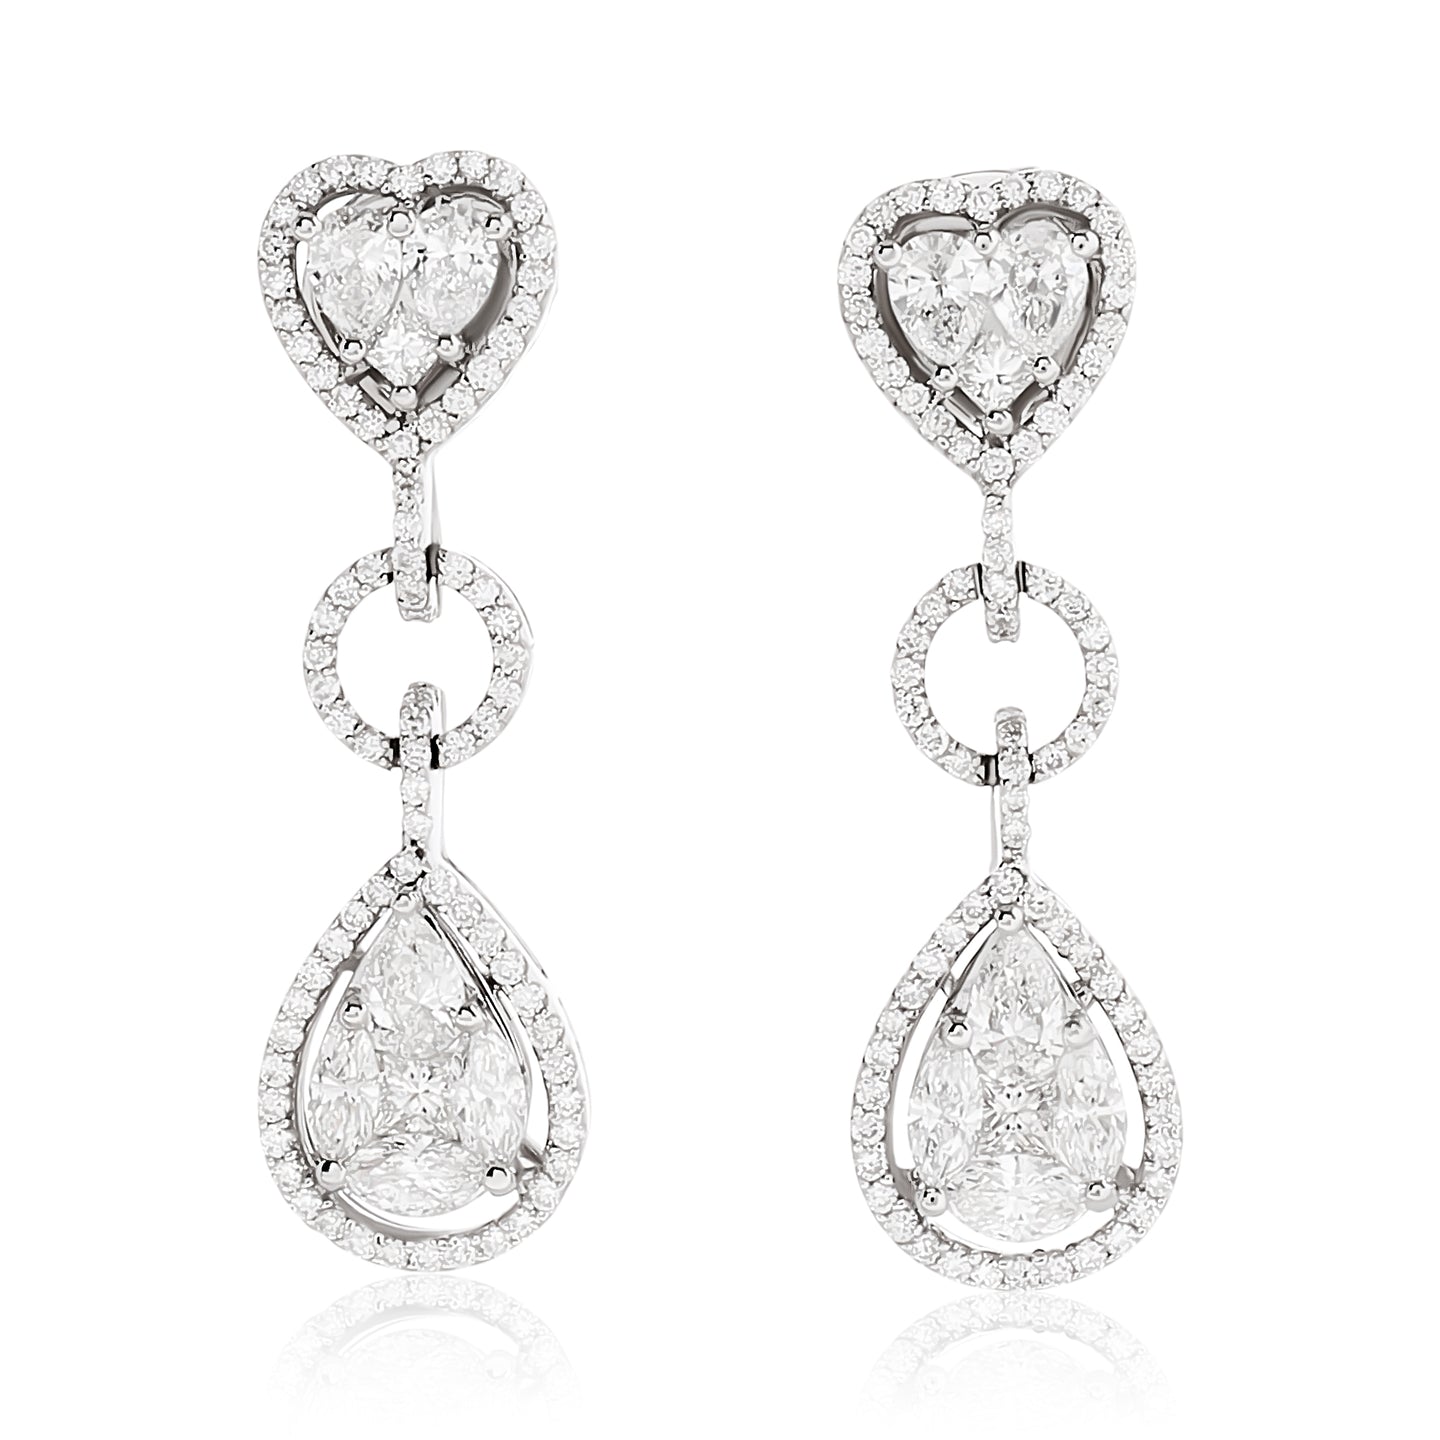 Heart and Pear Diamond Dangle Earrings